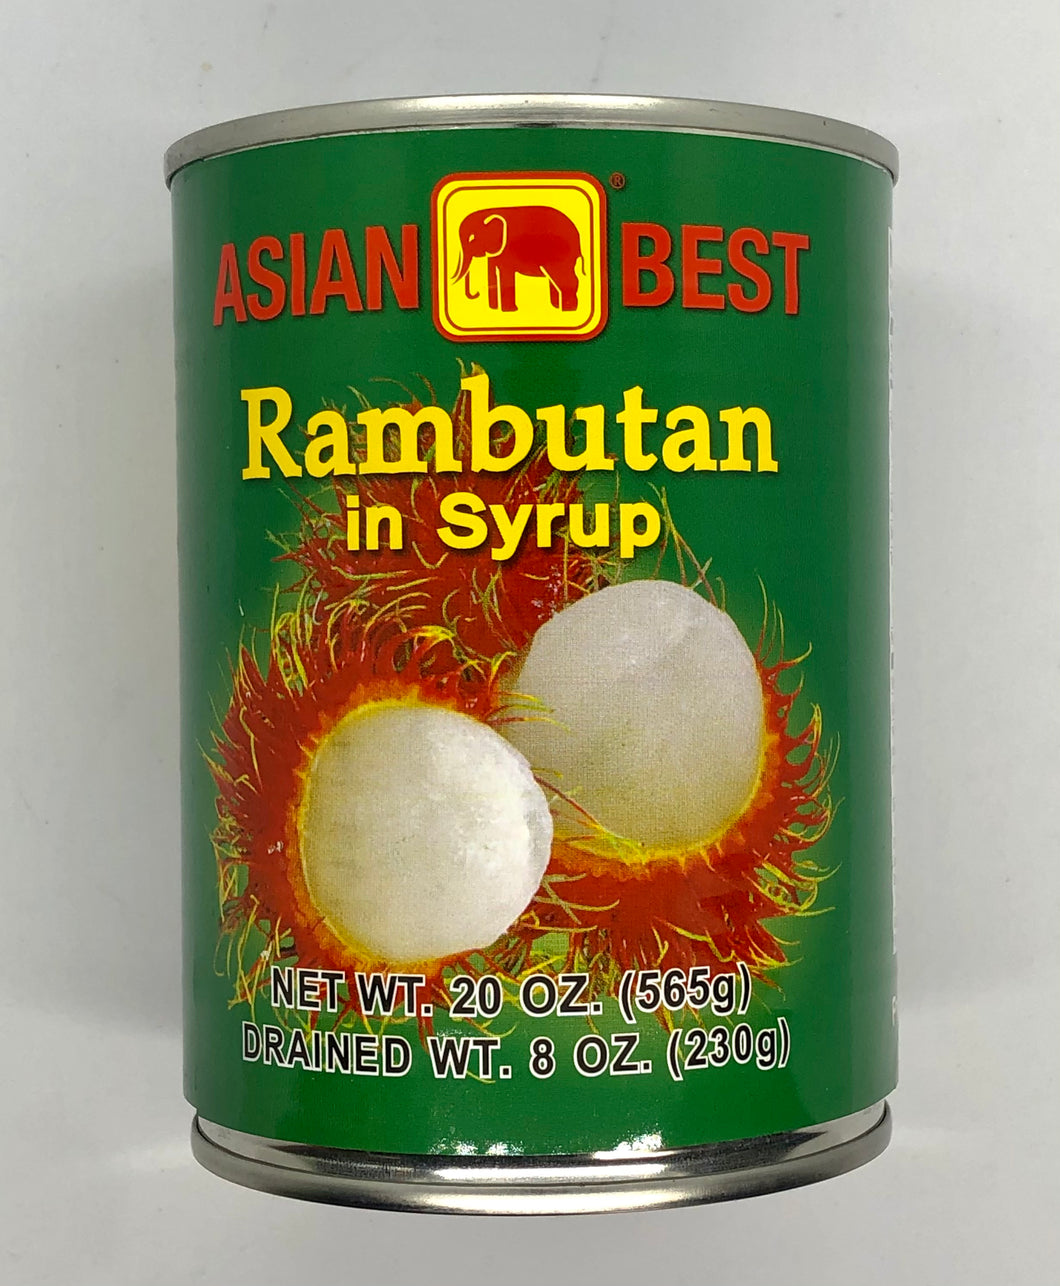 Rambutan in Syrup (ကြက် မောက် သီး)